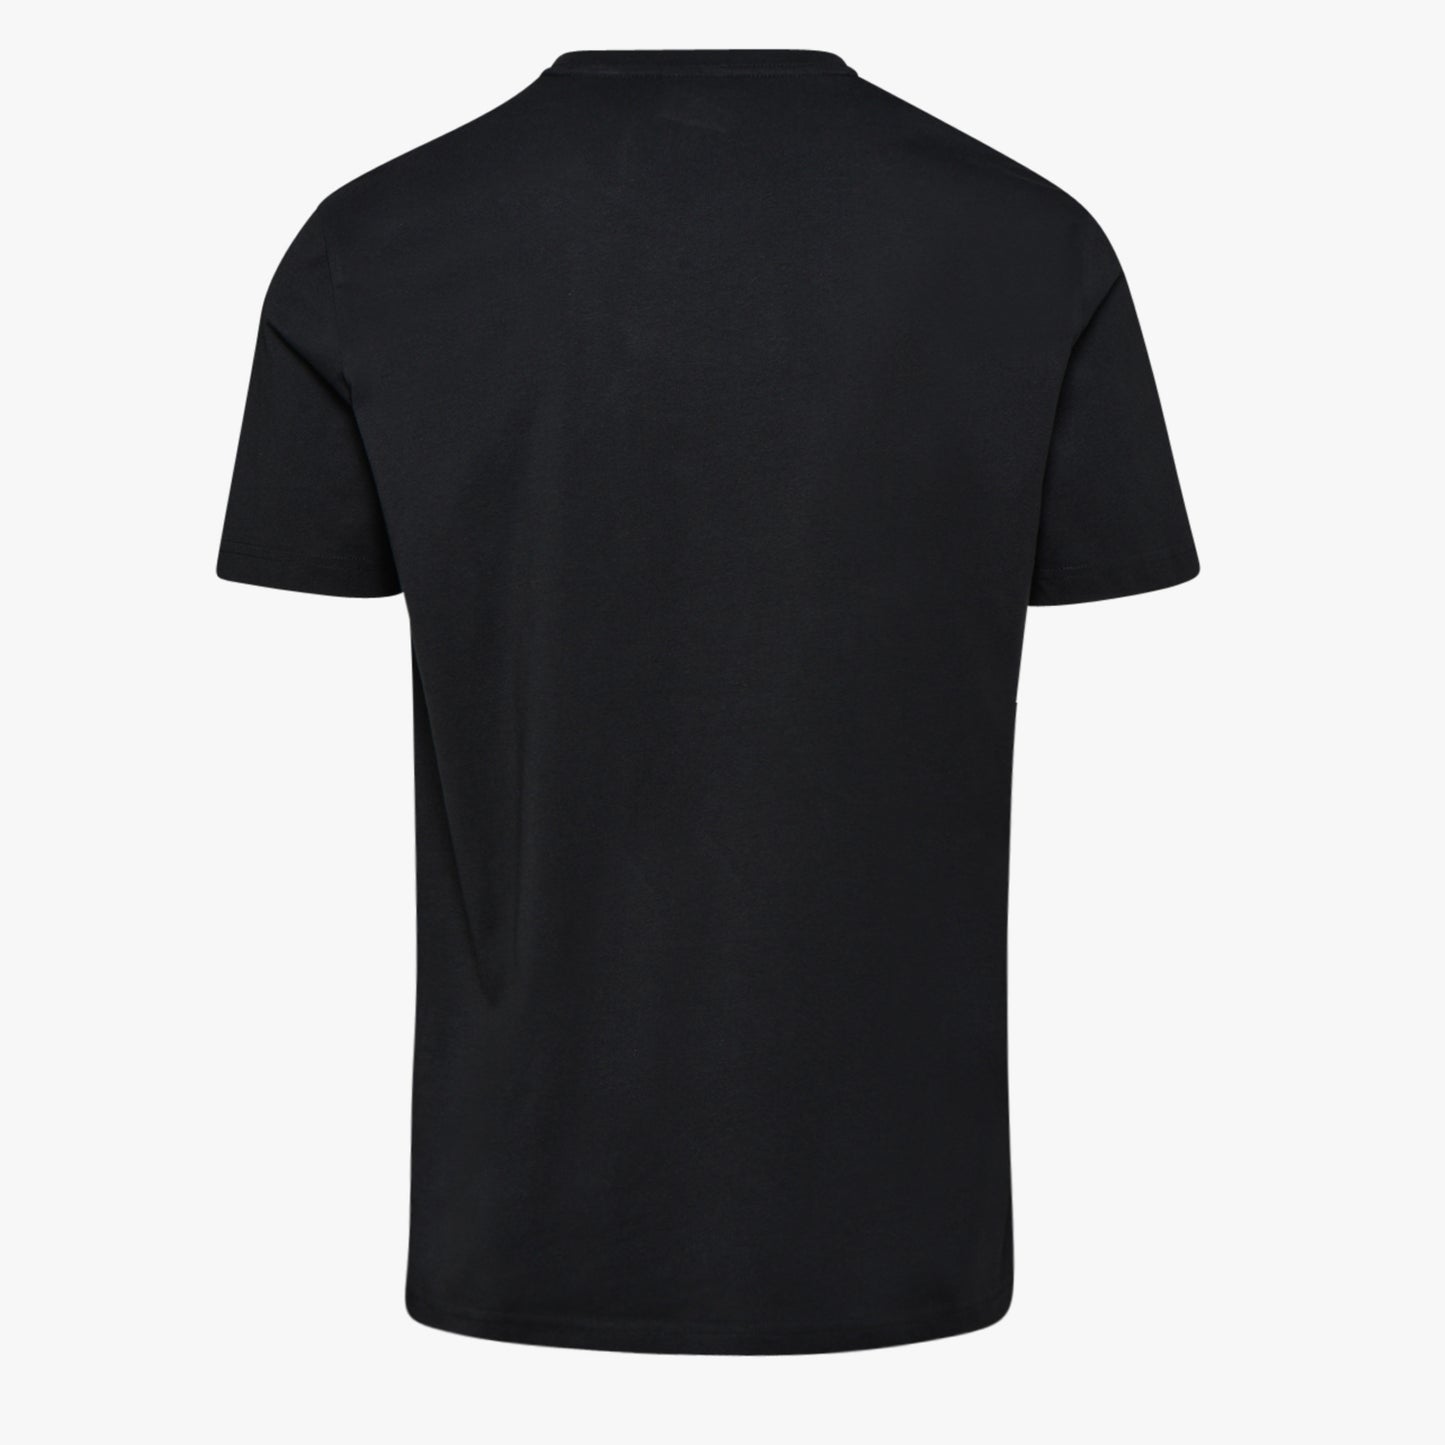 Diadora - T-shirt SS 5Palle Targa Black